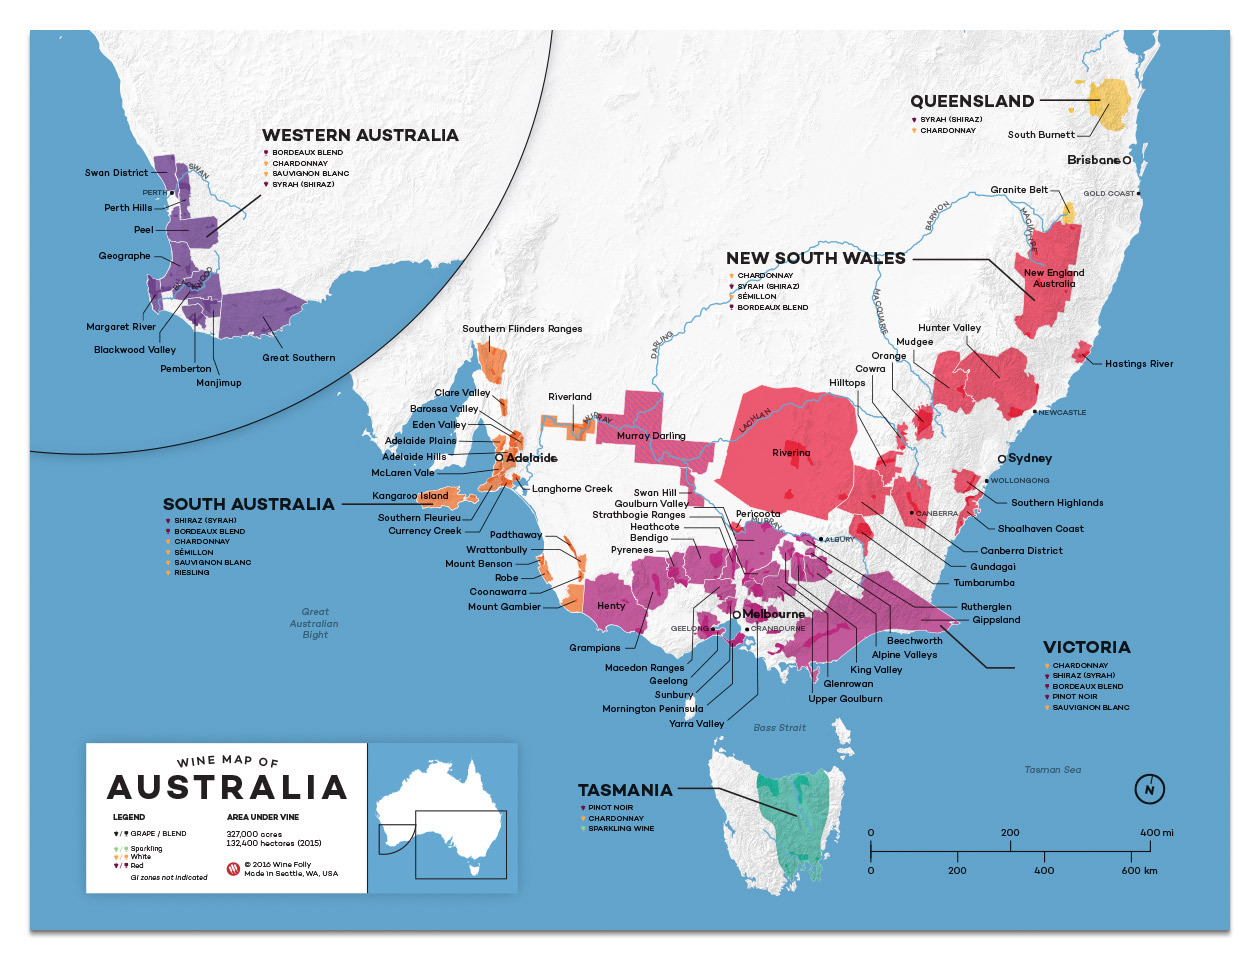 Australia-wine-map2.jpg